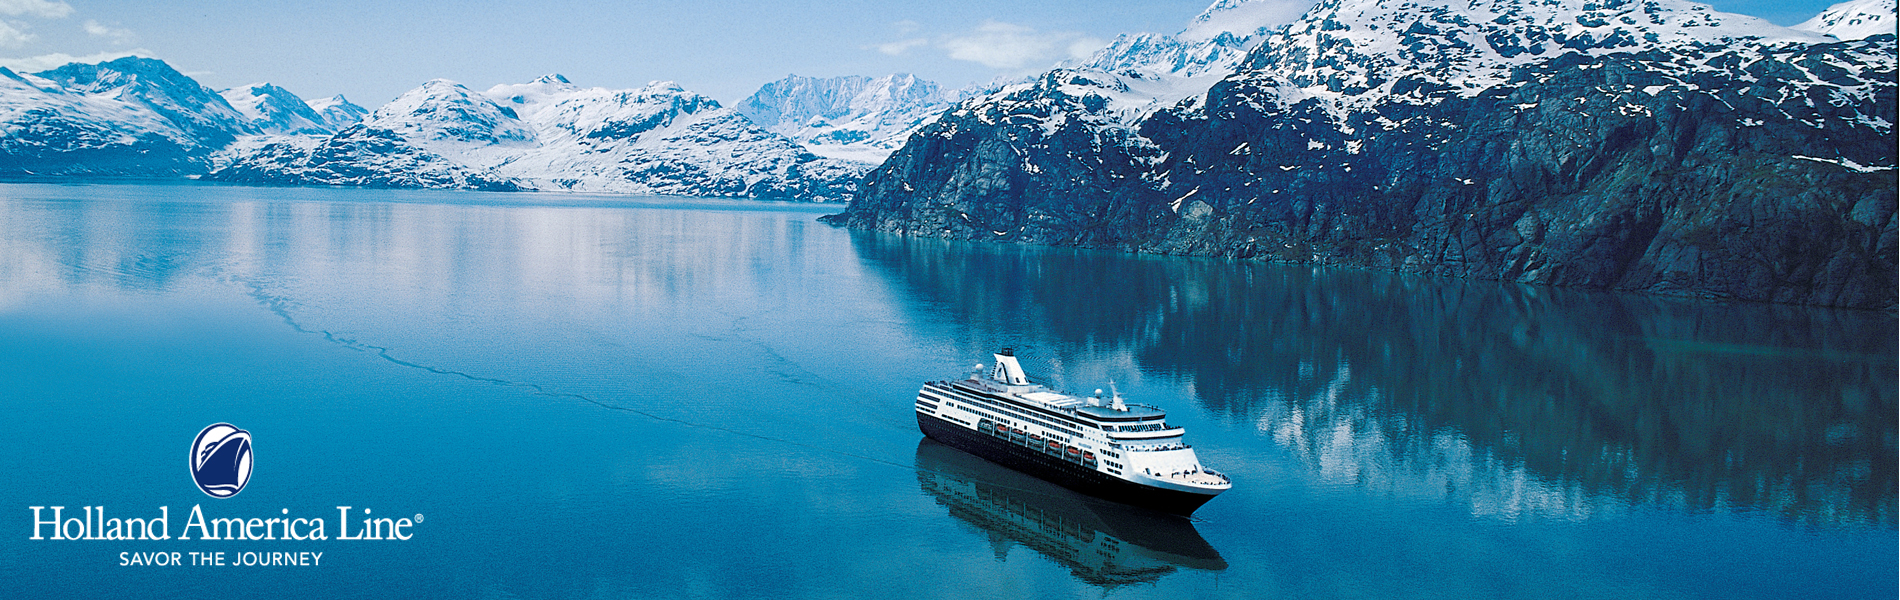 Six Holland America Line Ships Offer Award-Winning Alaska and Glacier Bay Cruises in 2021